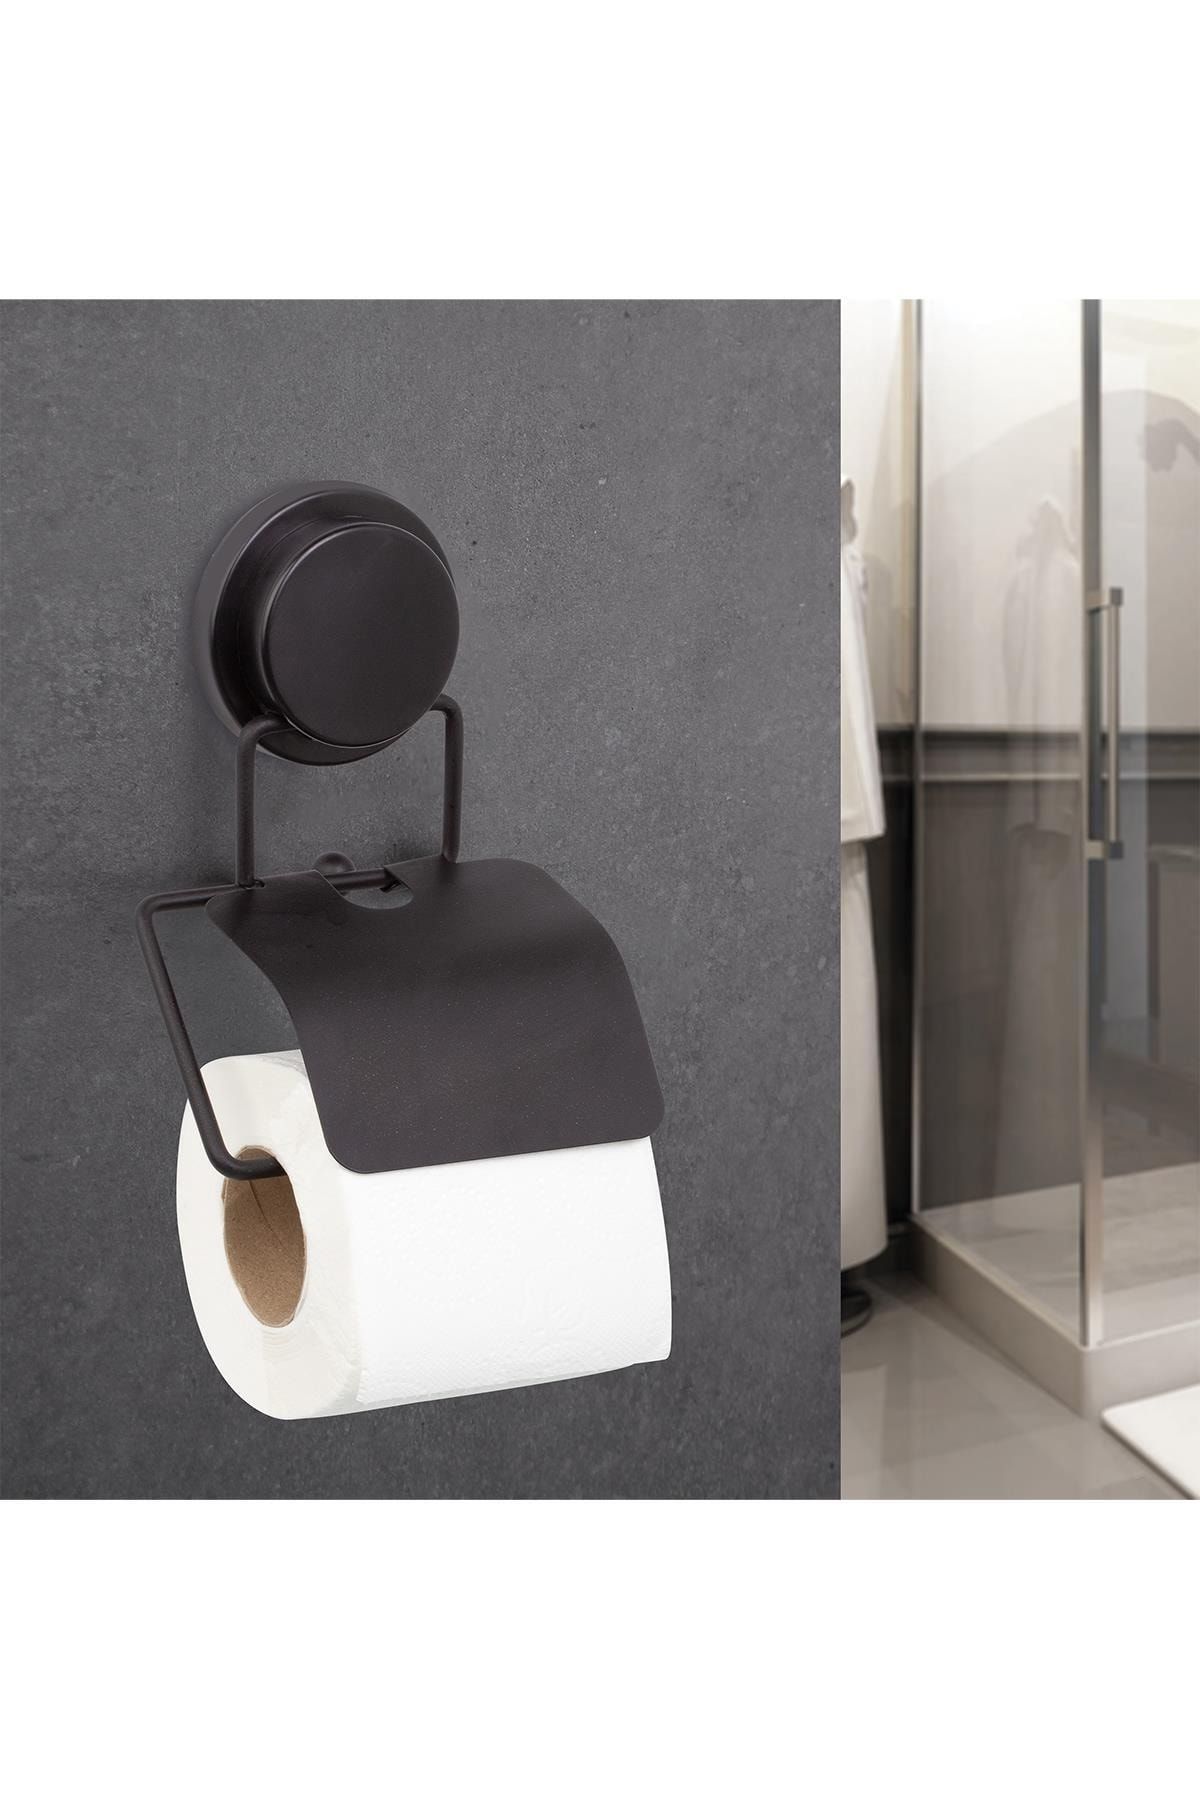 Okyanus Home Magic Fix Sihirli Yapışkan Siyah Kapaklı Tuvalet Kağıtlık MGS-712